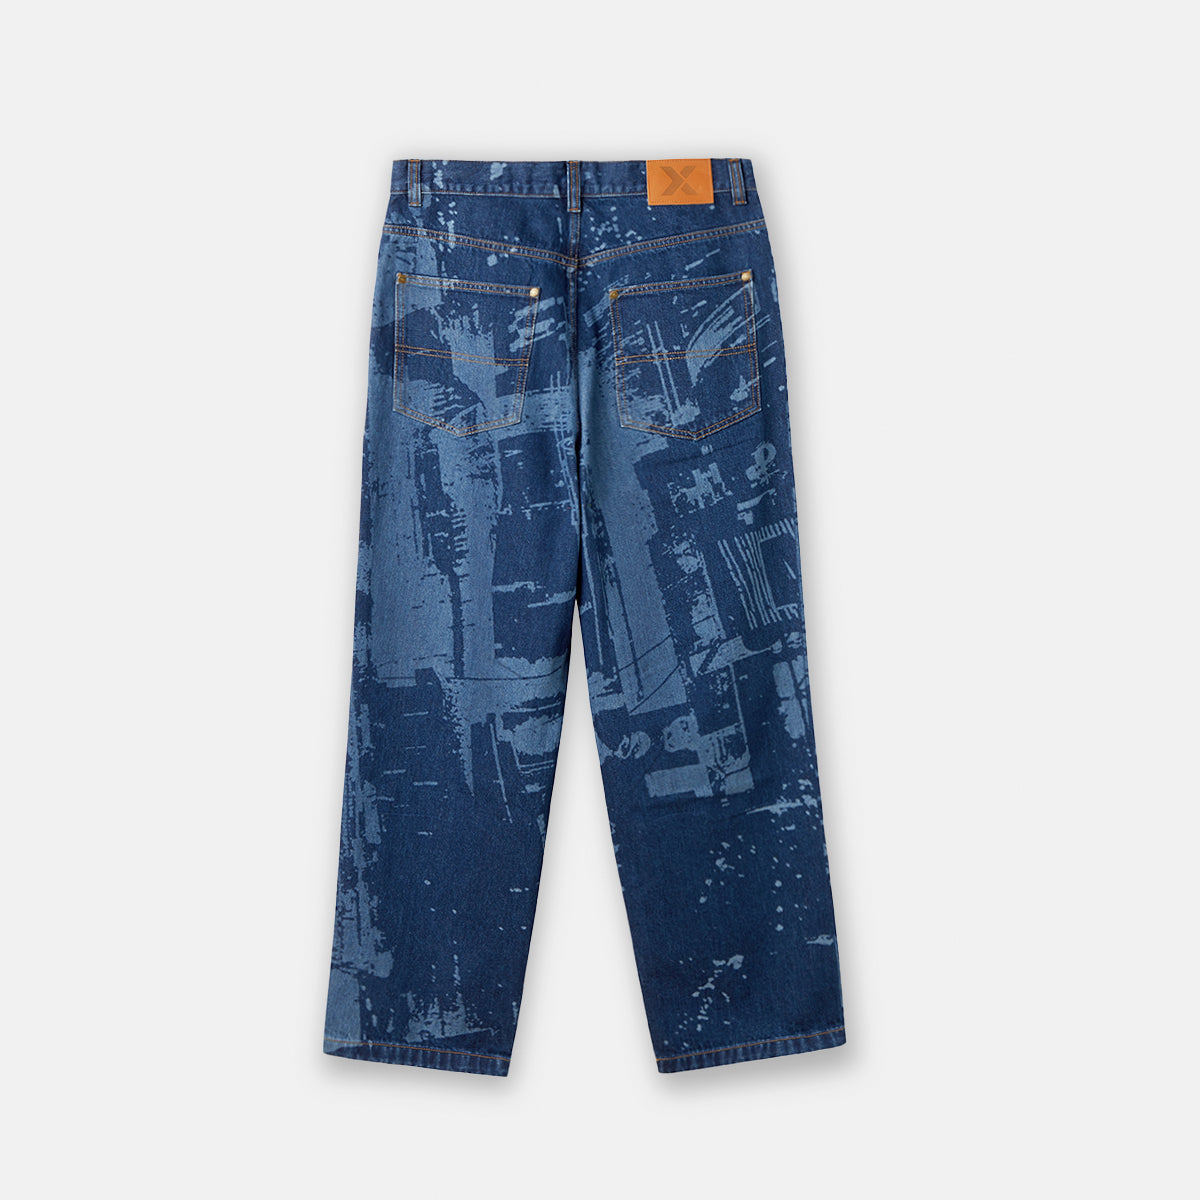 NXT City Laser Print Jeans